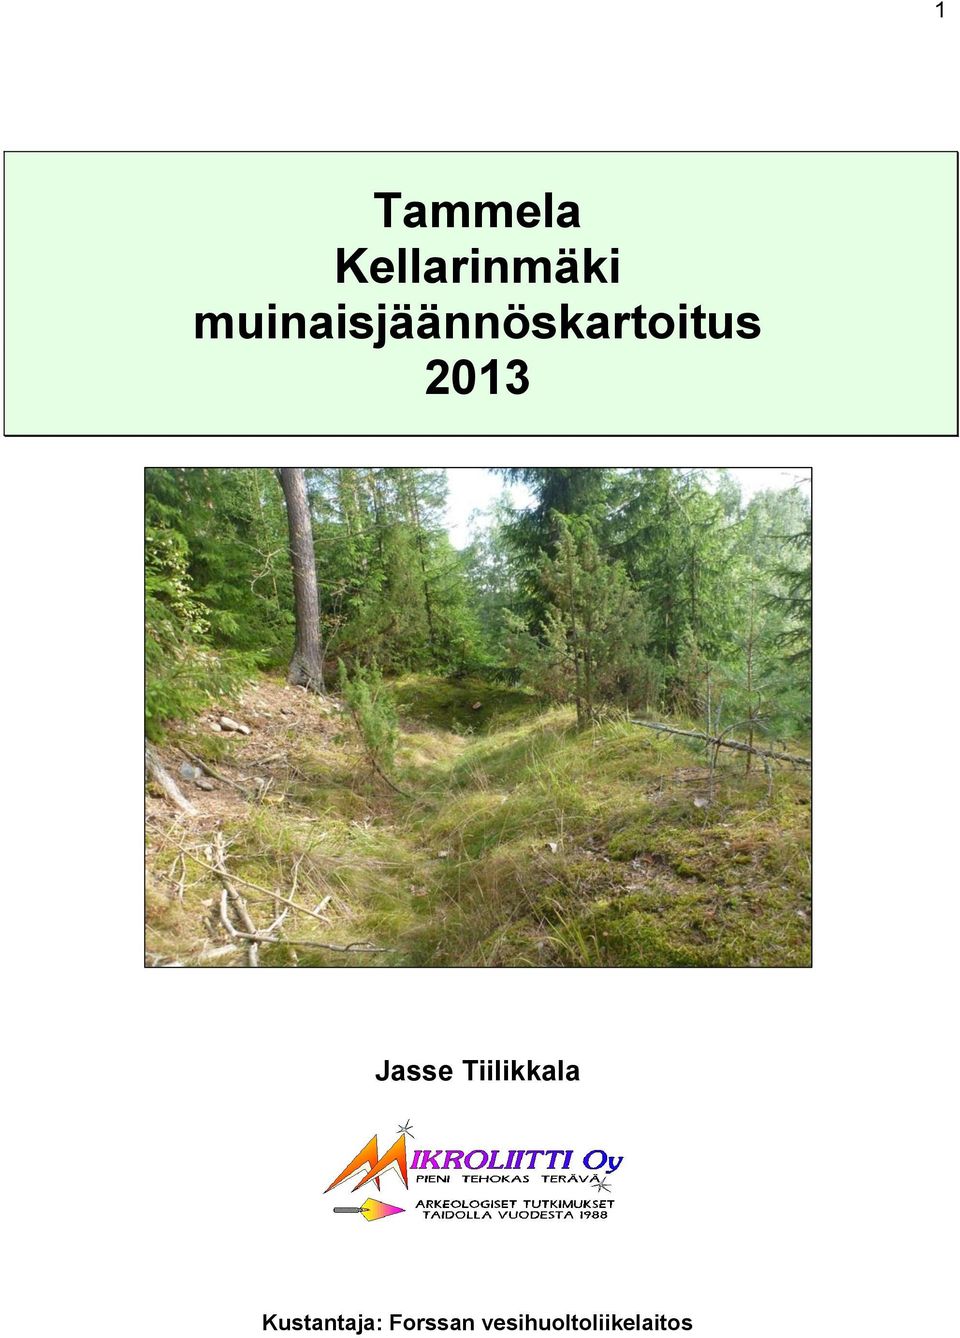 2013 Jasse Tiilikkala